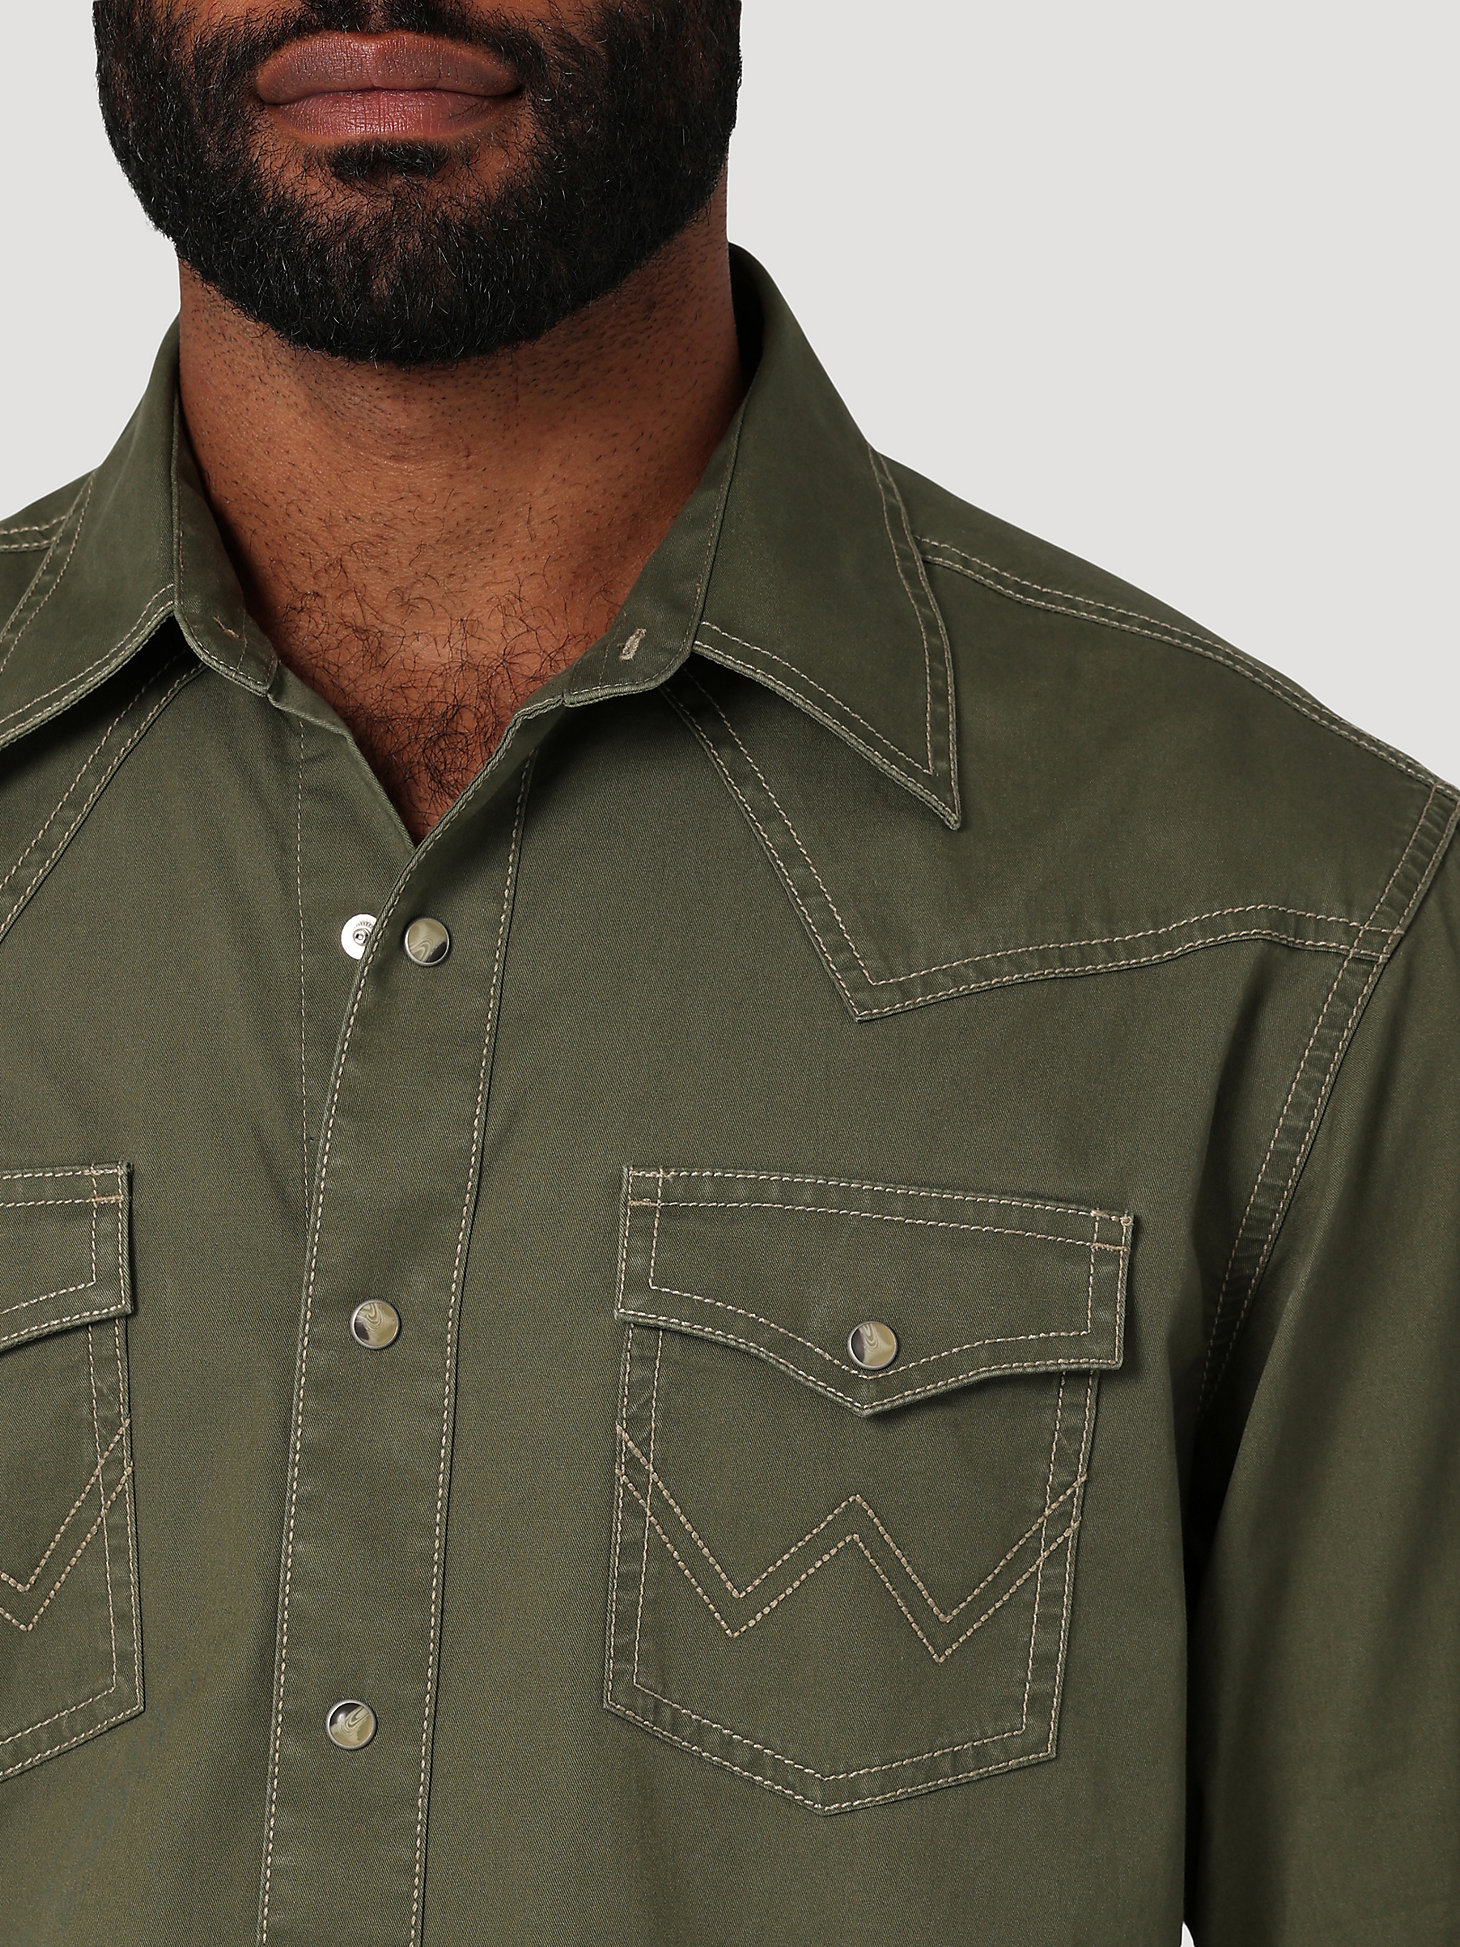 Men's Wrangler Retro Premium Western Snap Solid Shirt in Grape Leaf alternative view 2